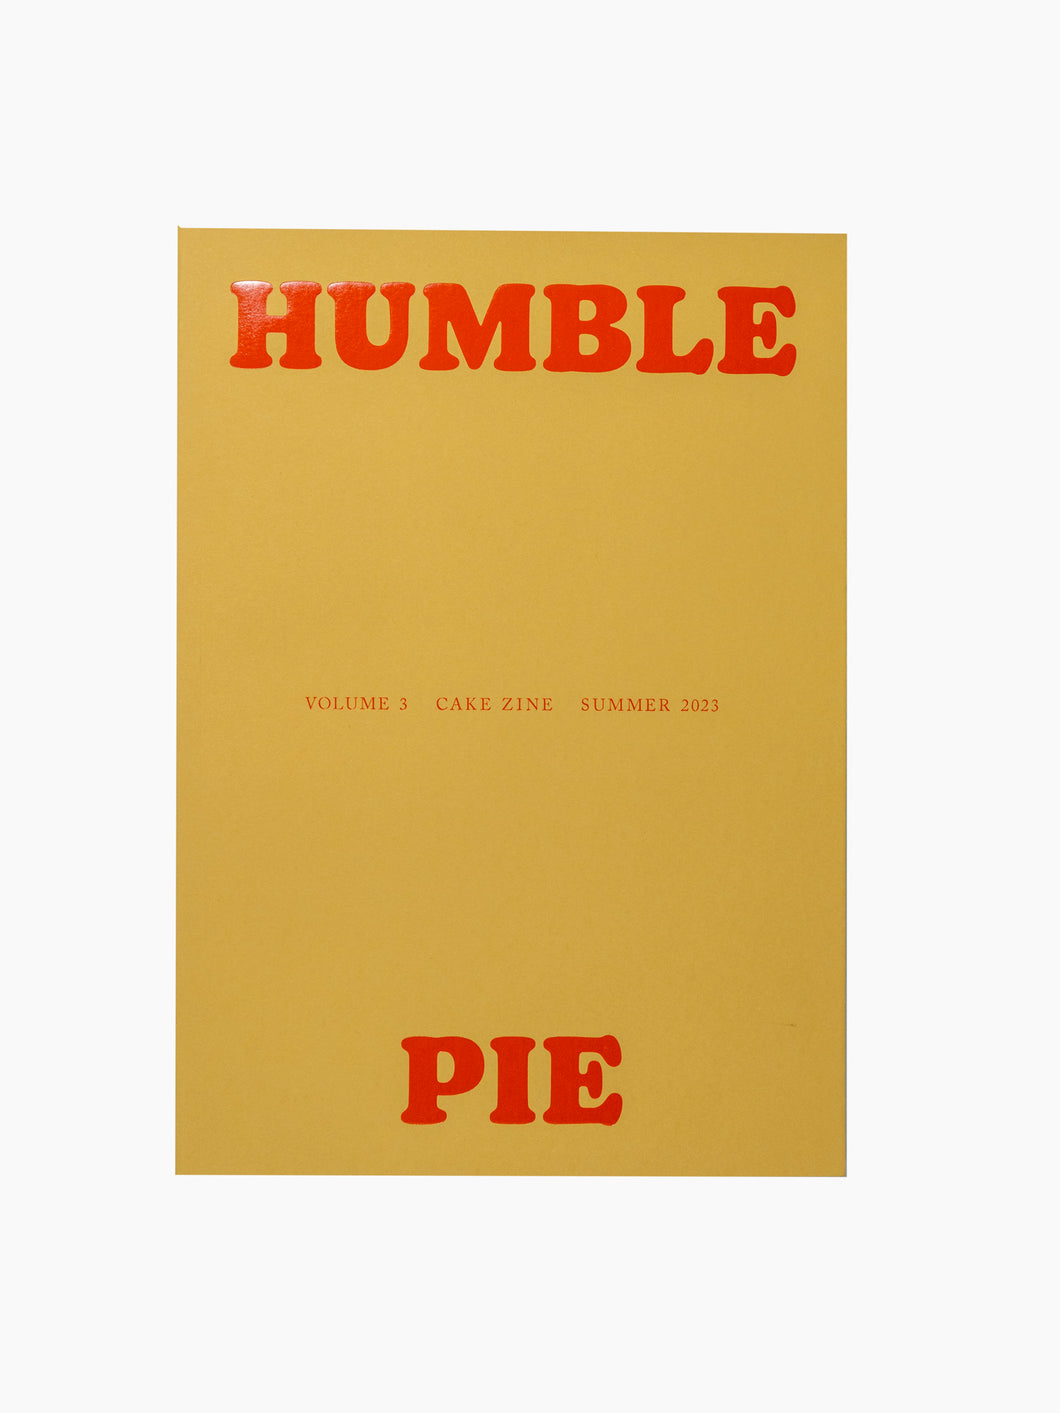 Cake Zine Issue #3: Humble Pie